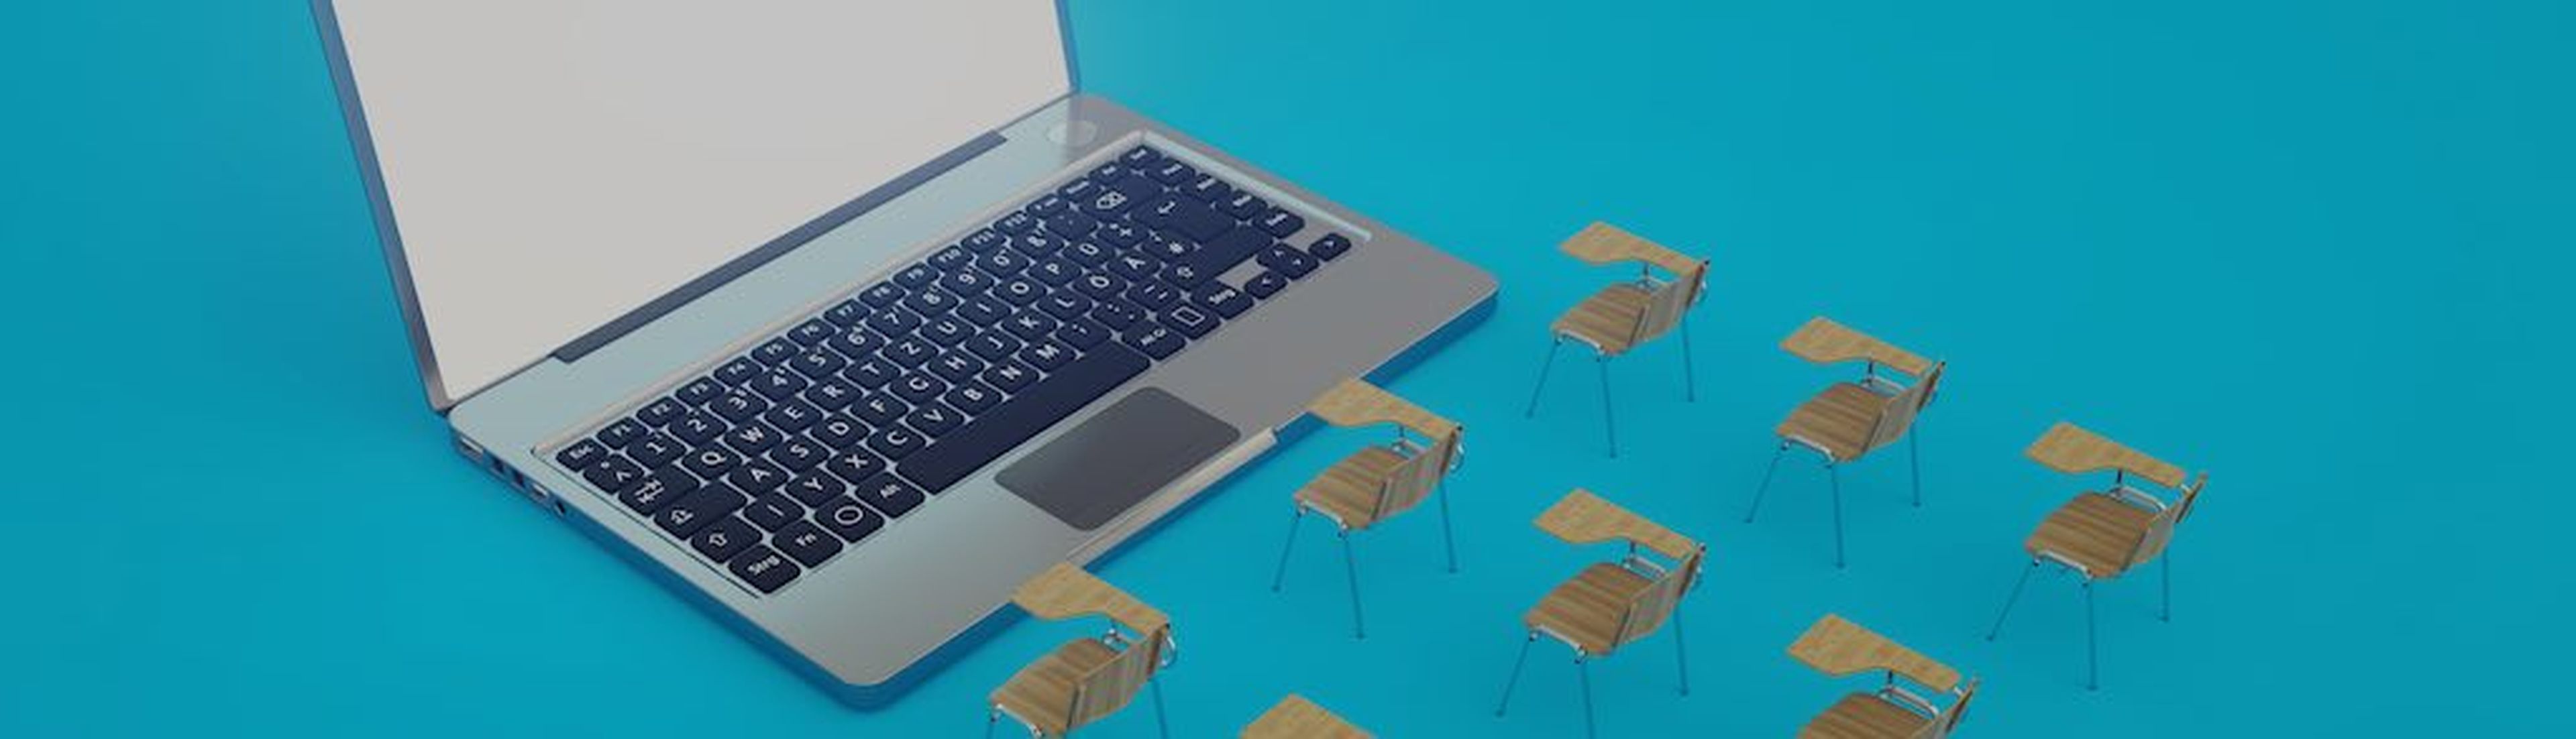 Digital classroom online education concept. School desks and laptop. 3d illustration.